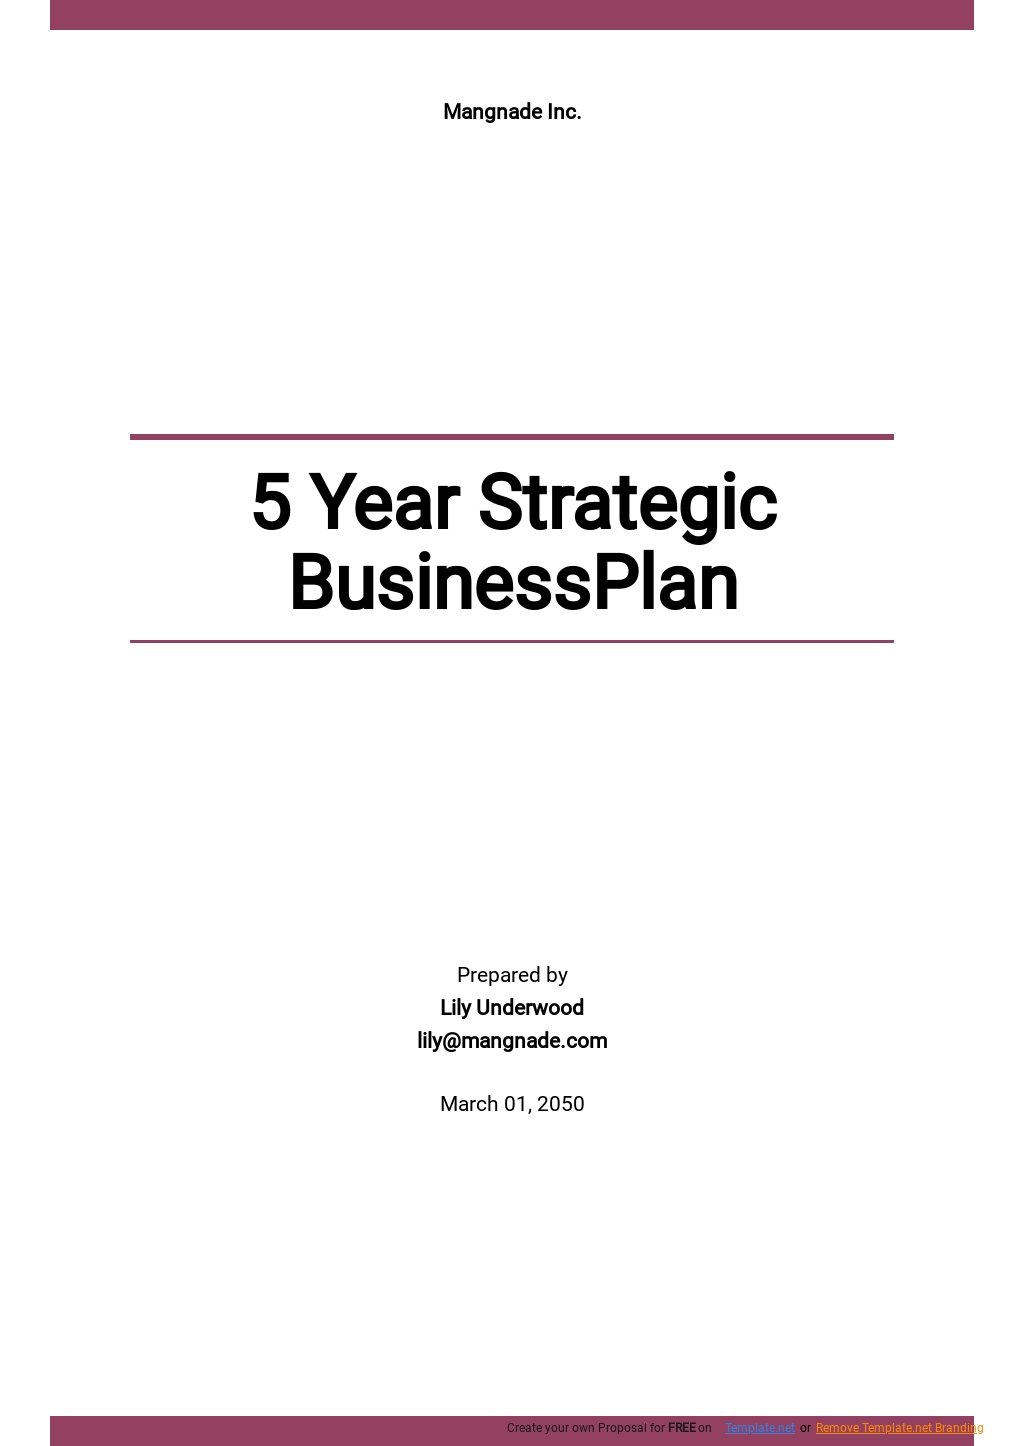 sample 5 year strategic business plan